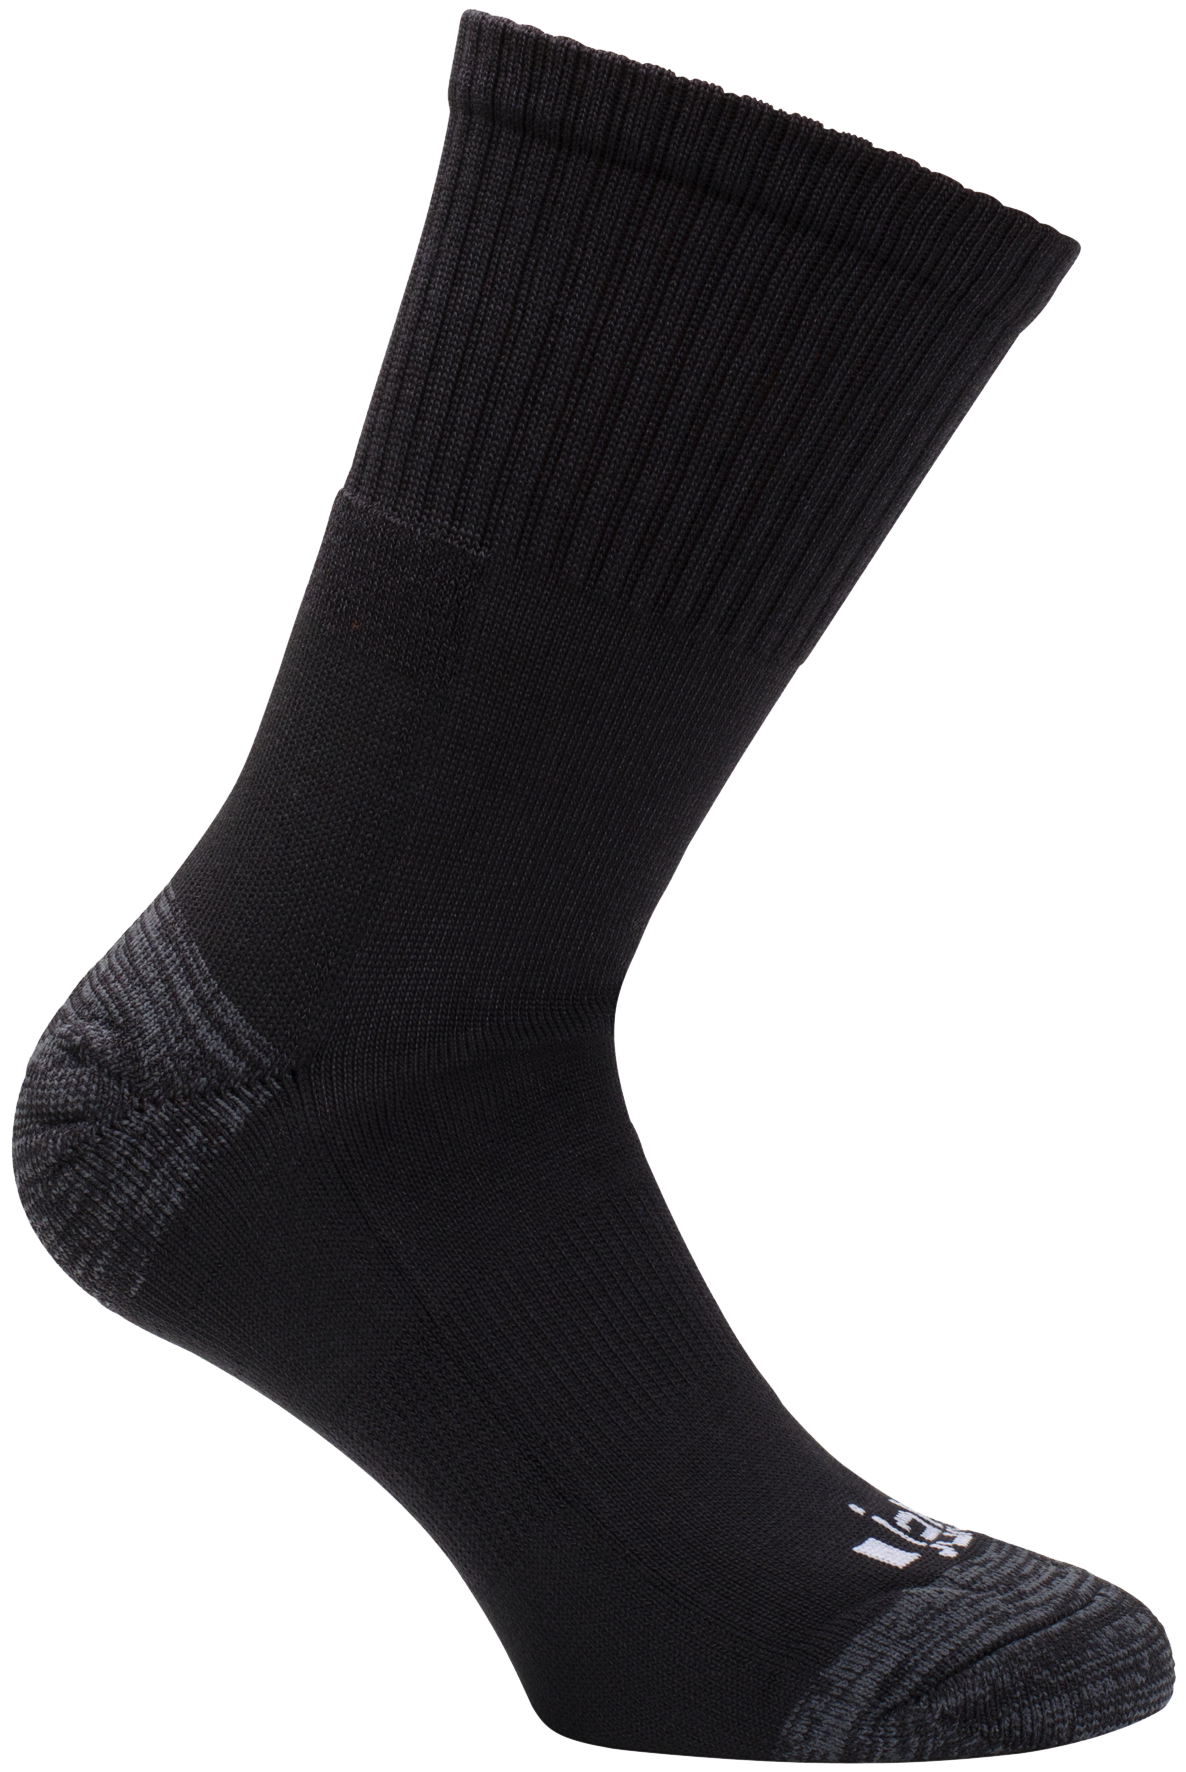 JALAS® 8210 Mediumweight Socke